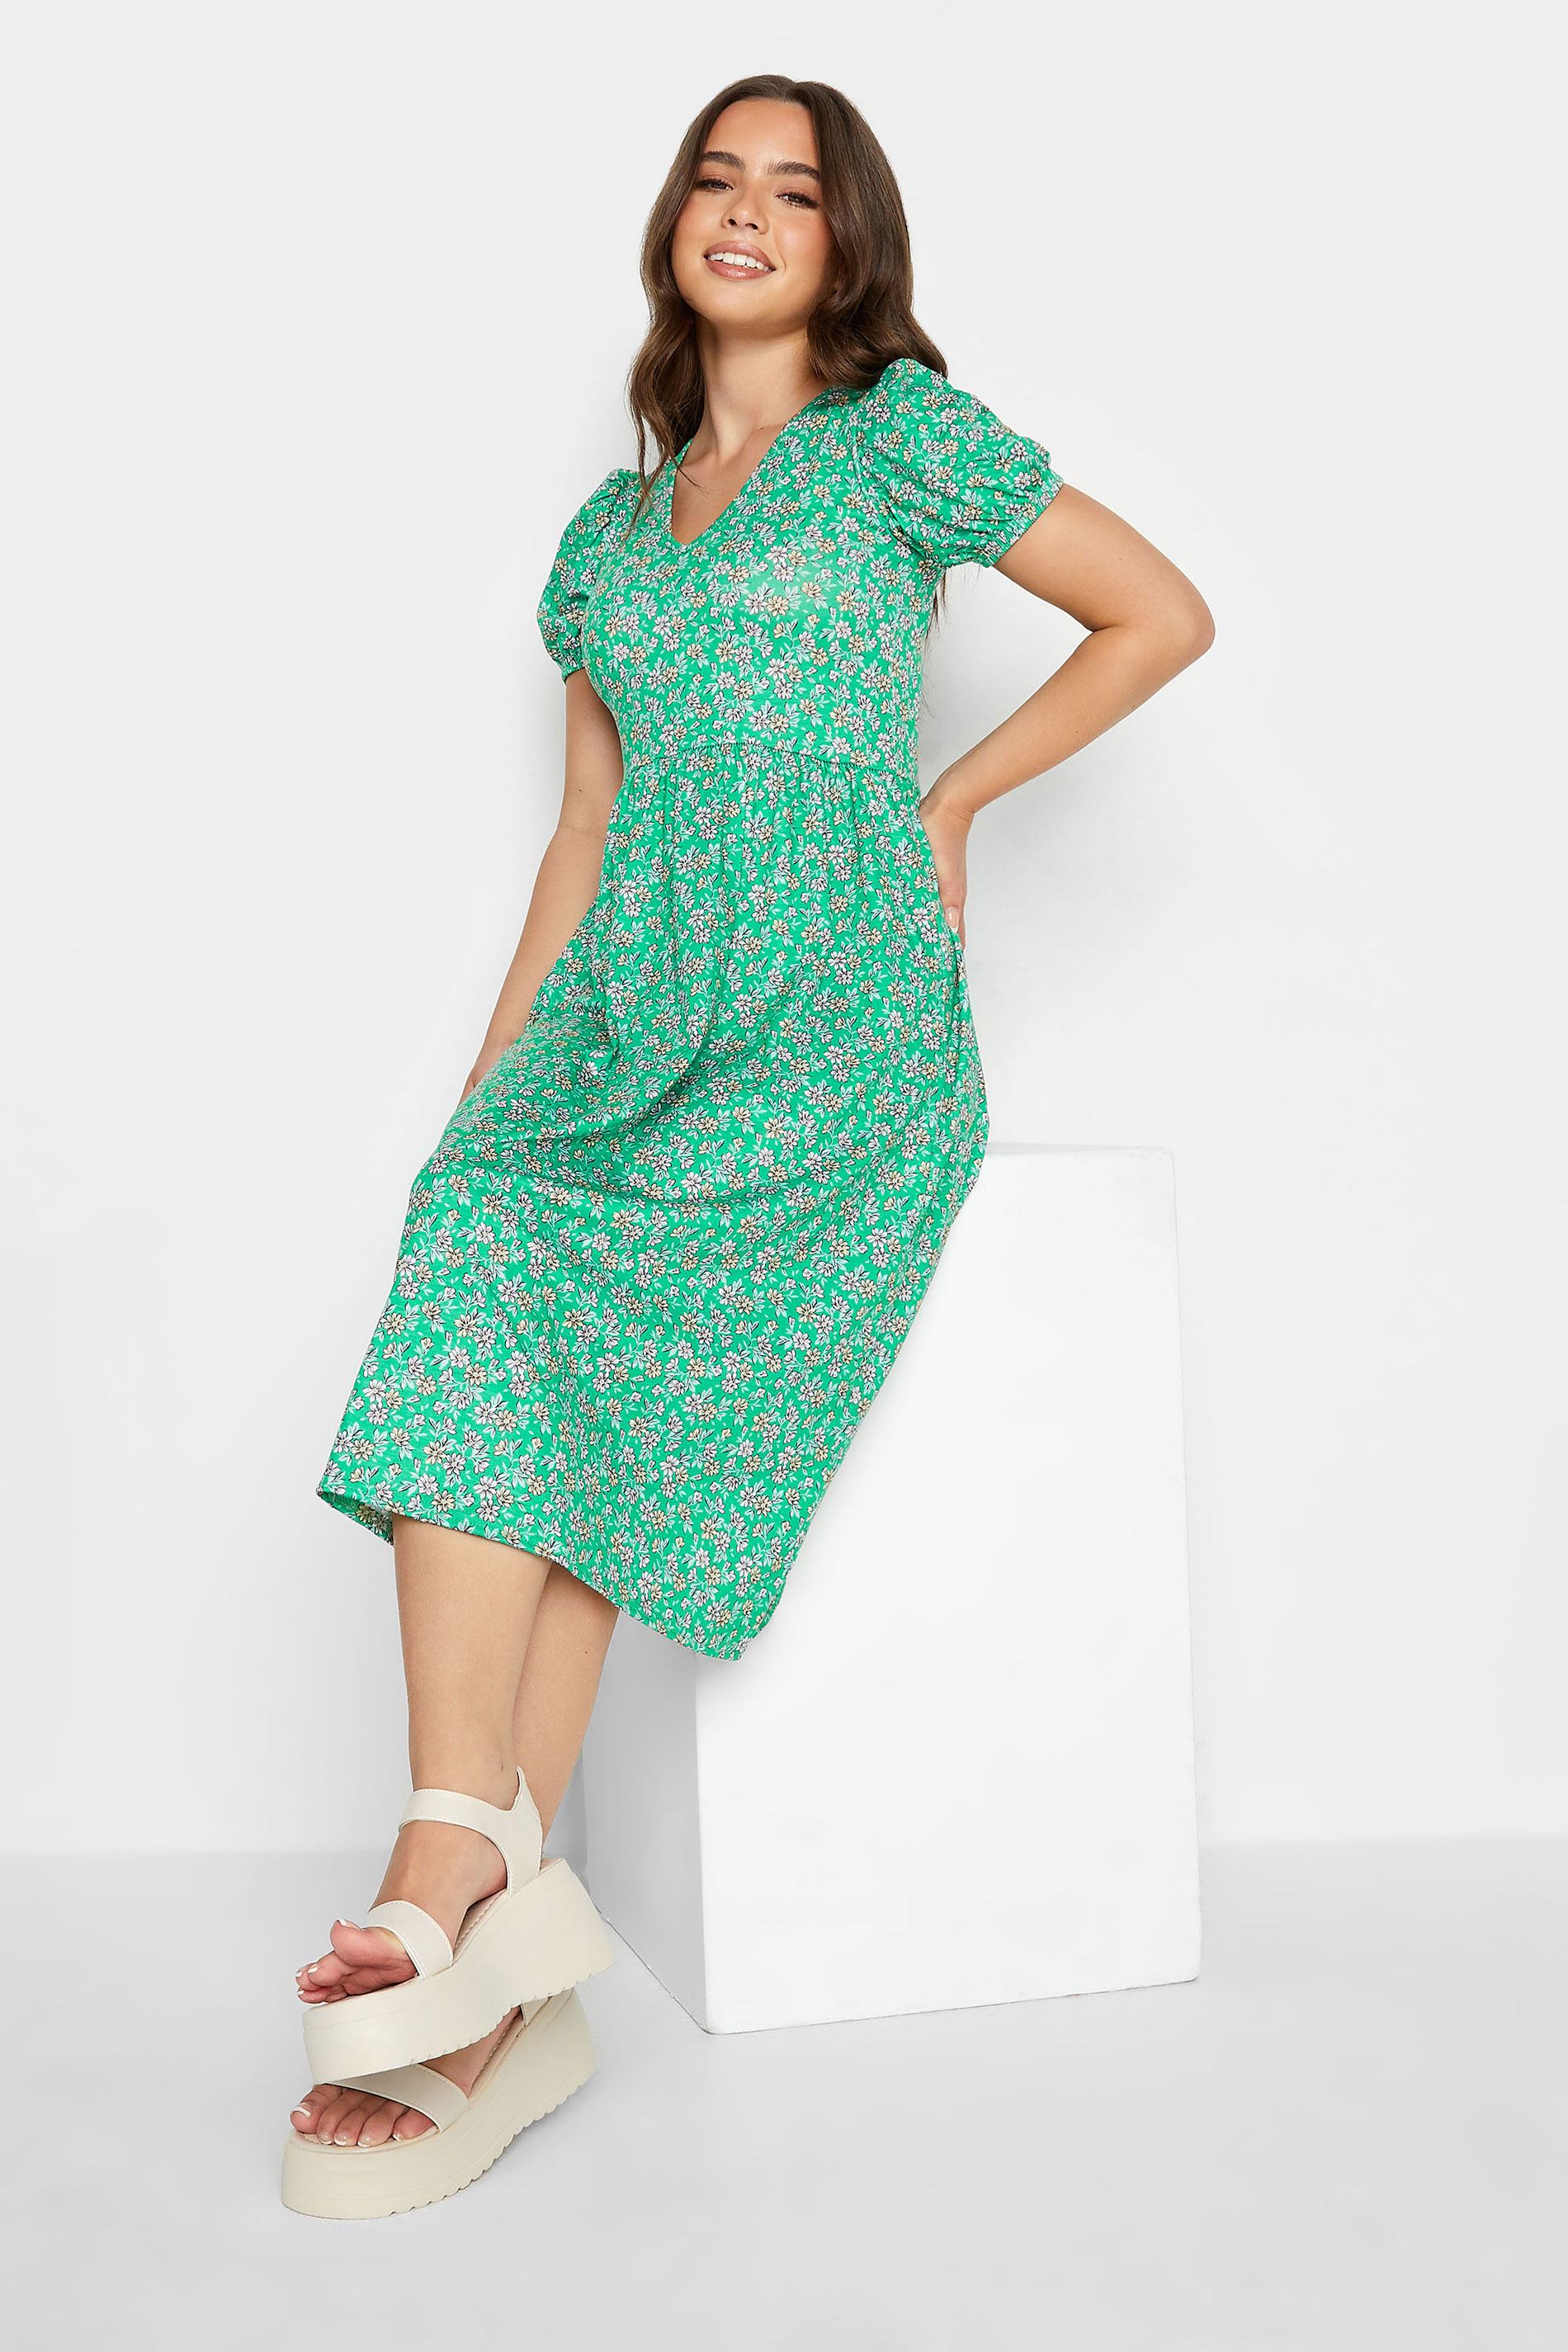 PixieGirl Green Ditsy Floral Print Dress | PixieGirl  2